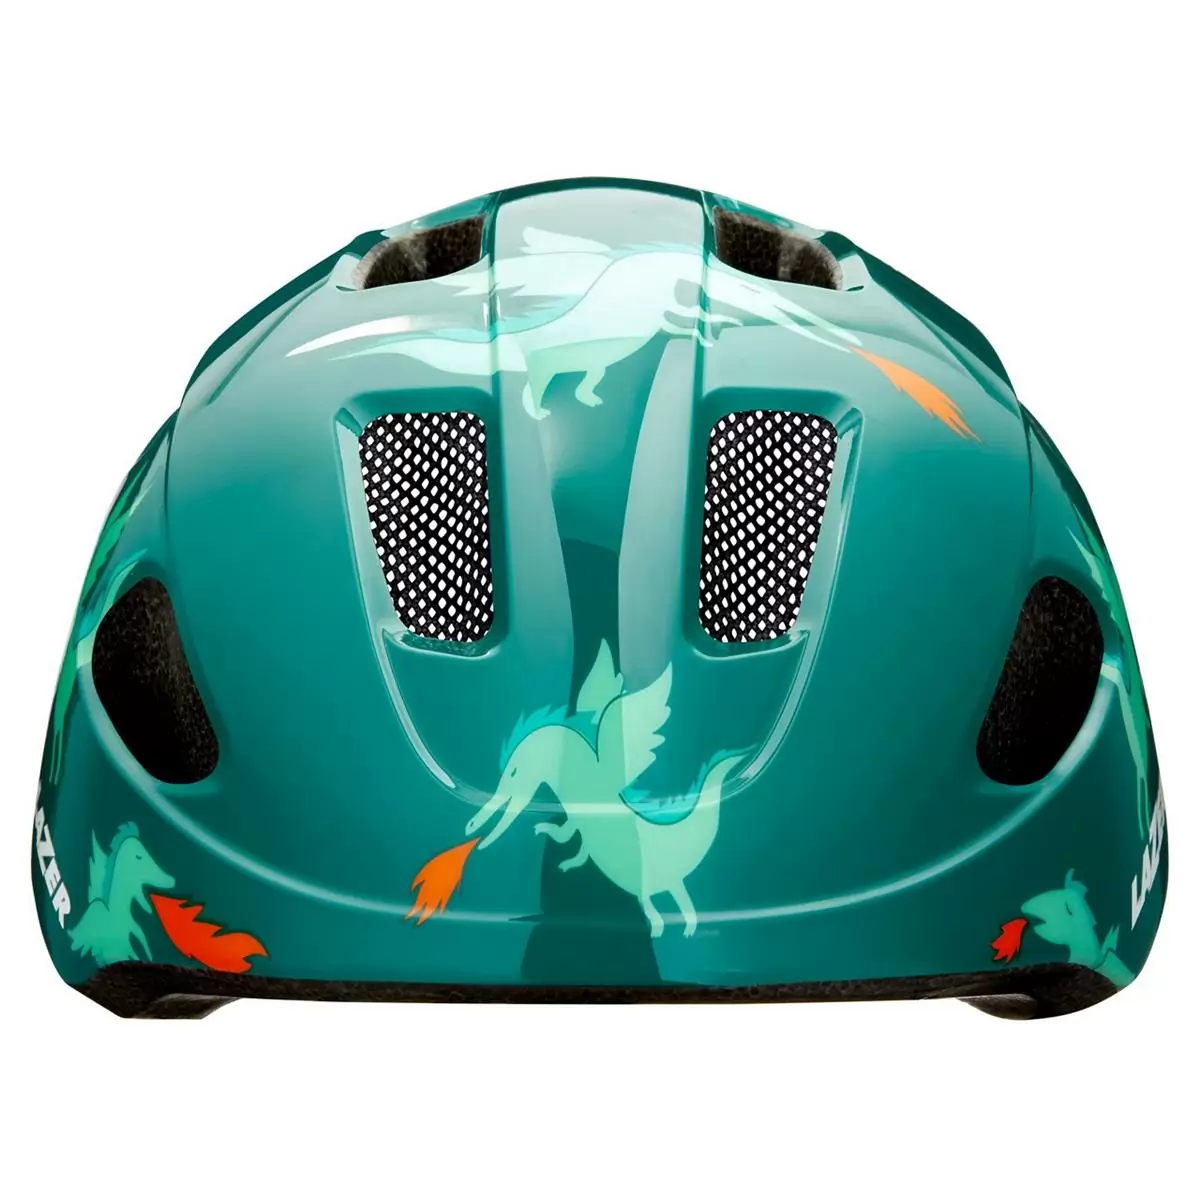 Nutz Kids Helmet KinetiCore CE Dragon Green One Size (50-56cm) #1